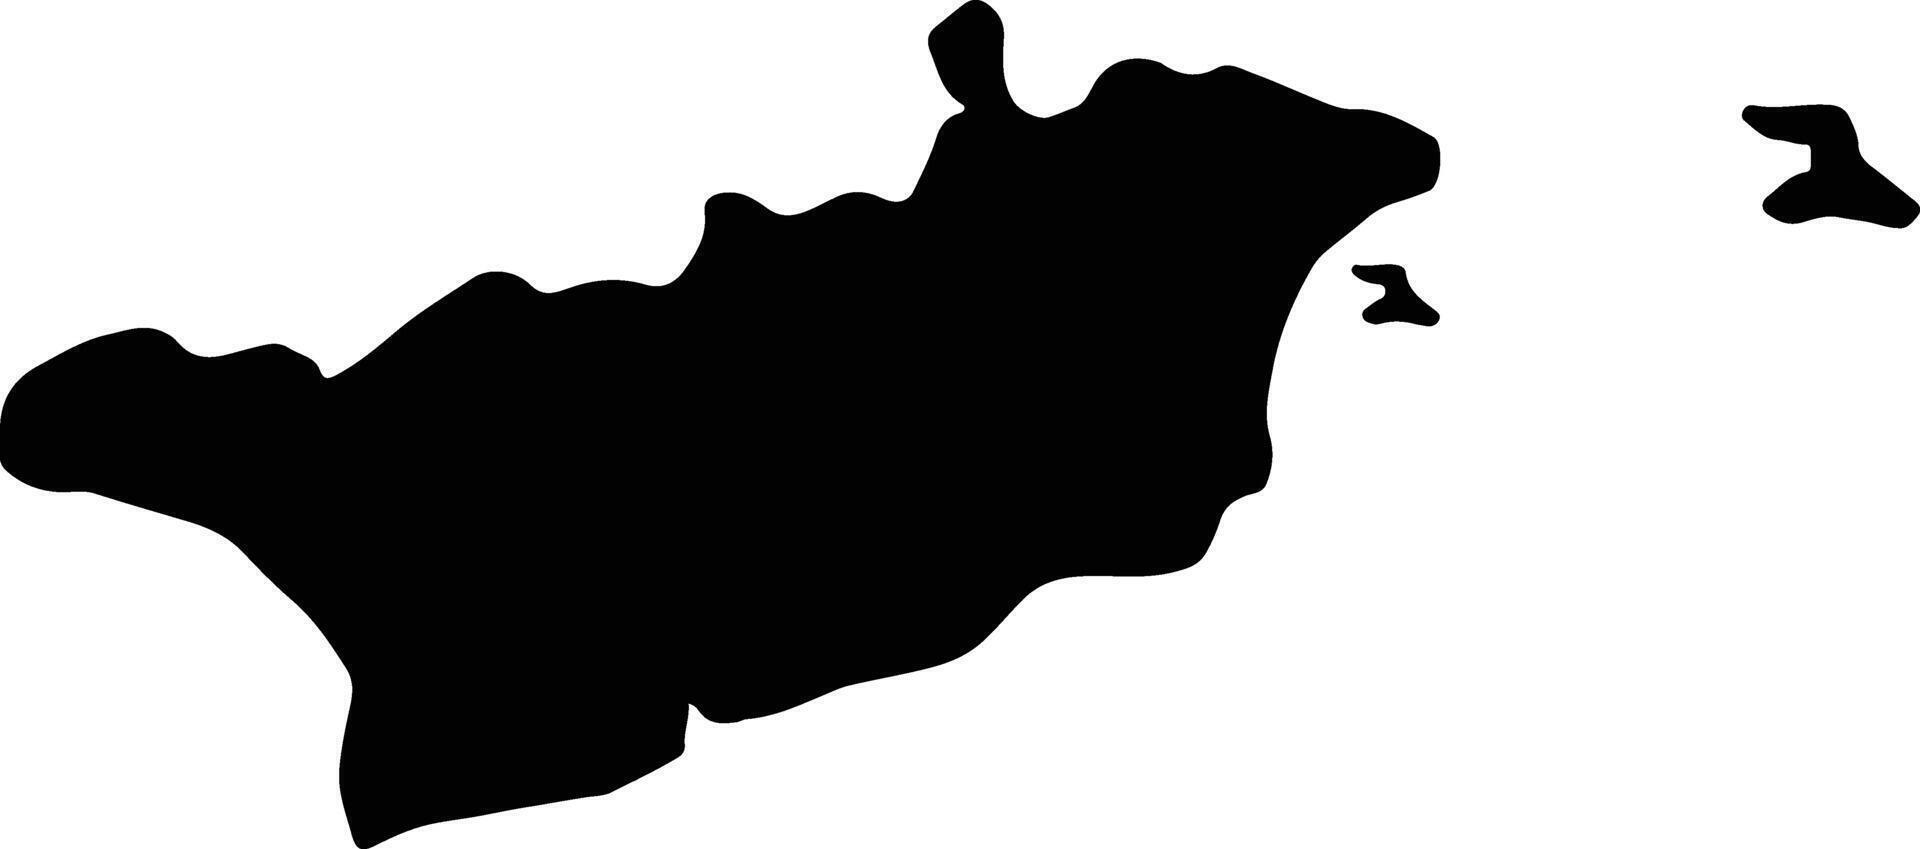 larnaca Chipre silueta mapa vector